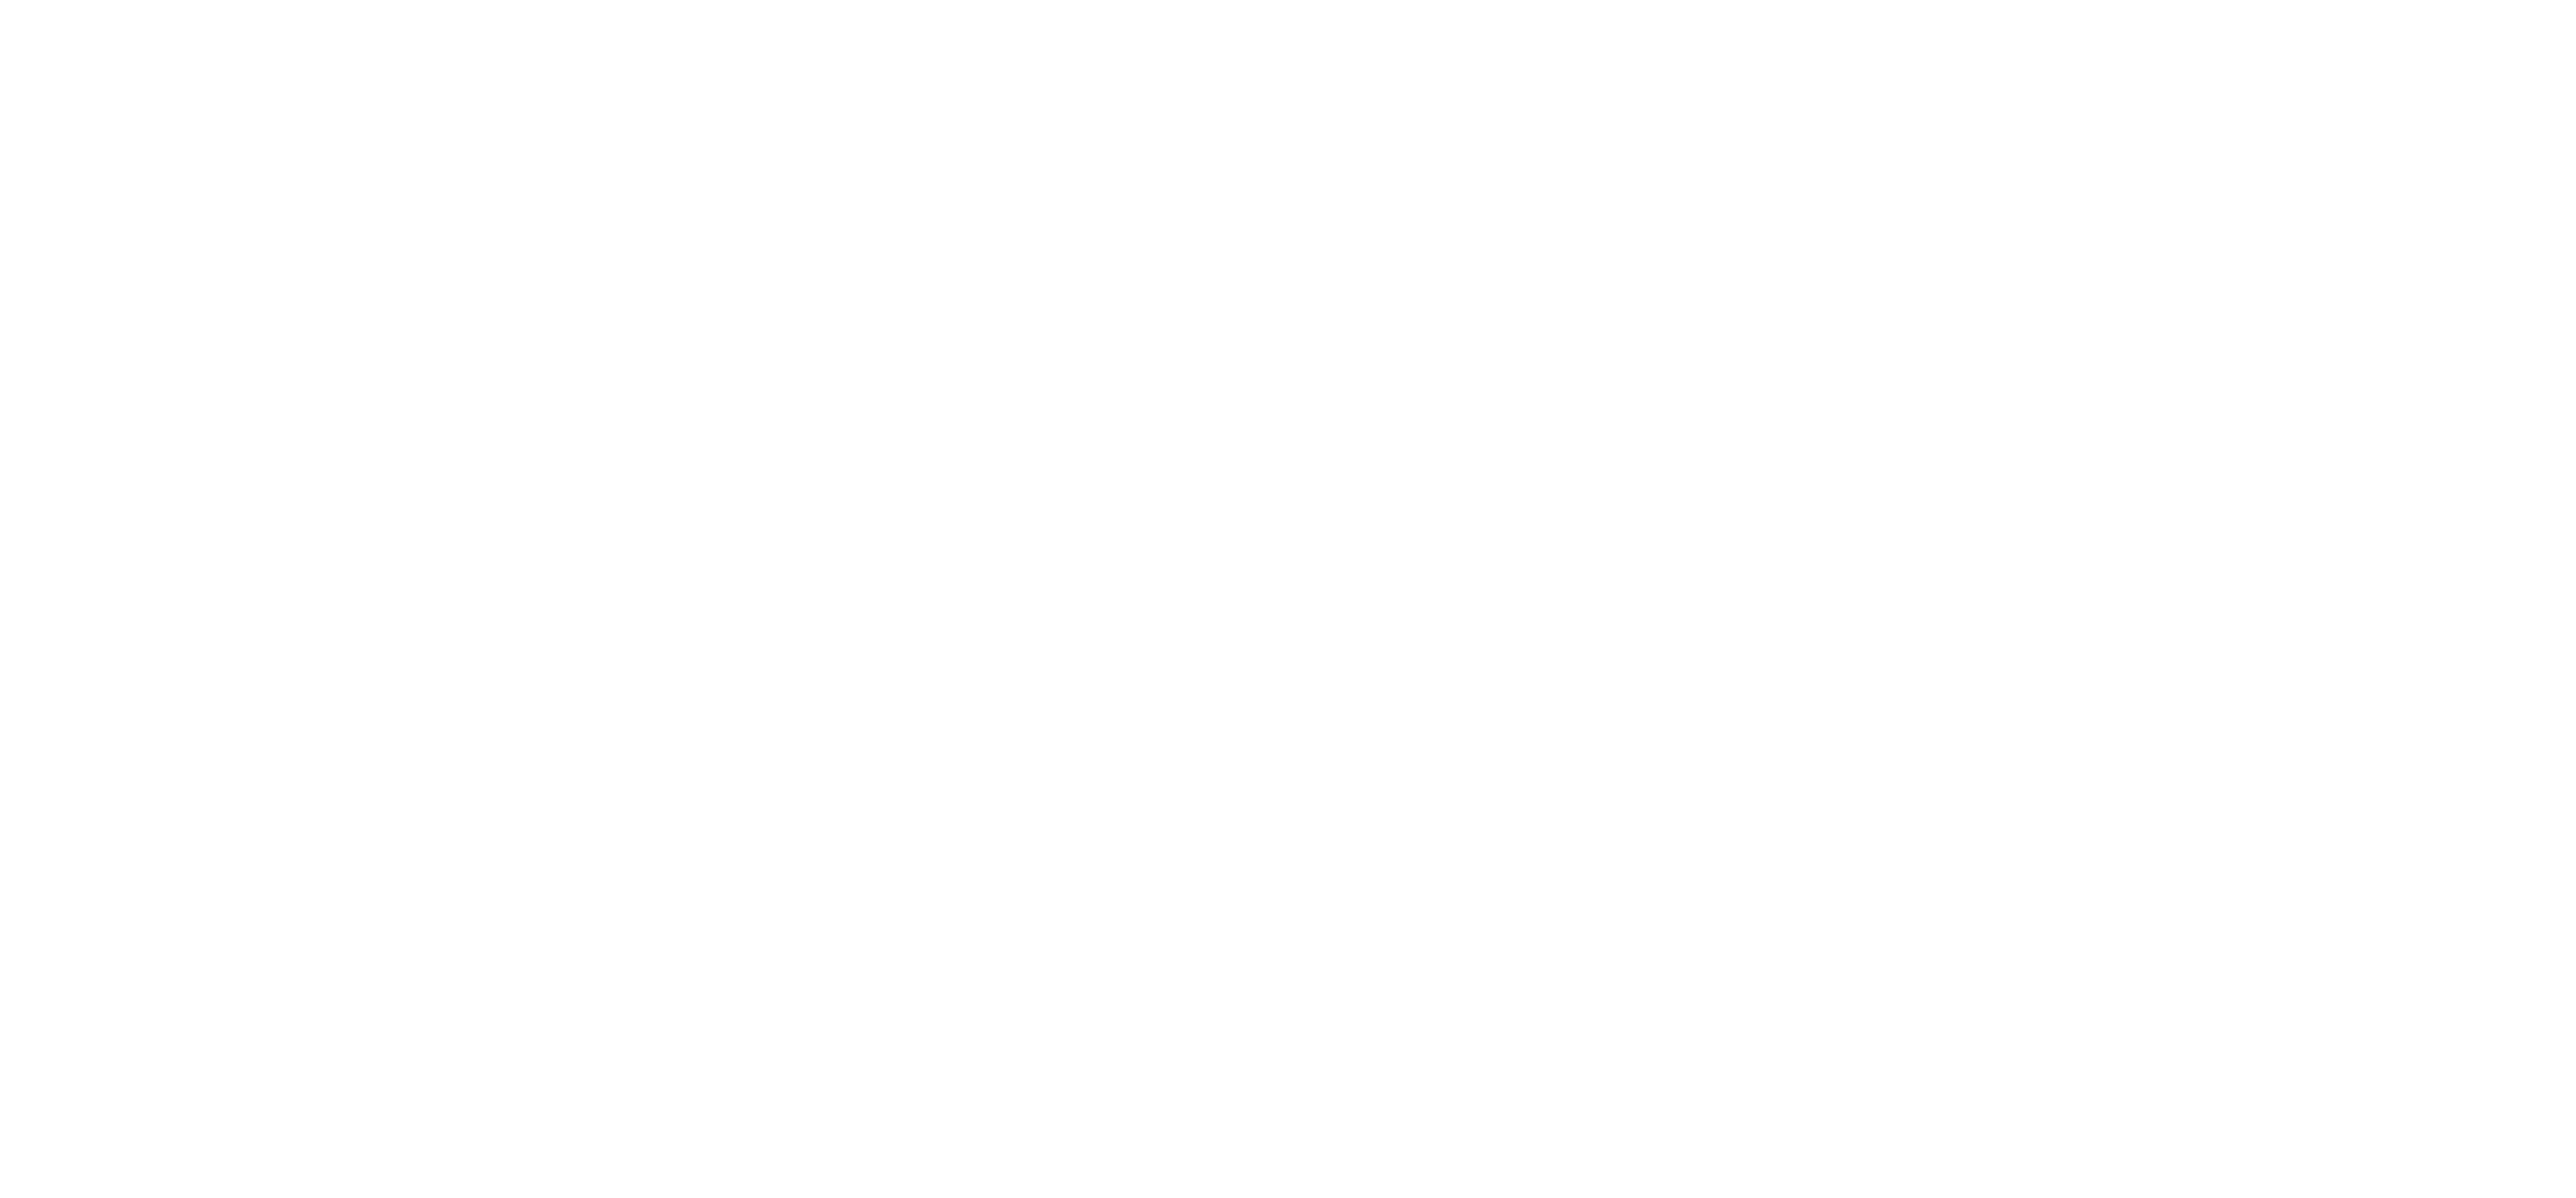 Woodley Town Council logo - white